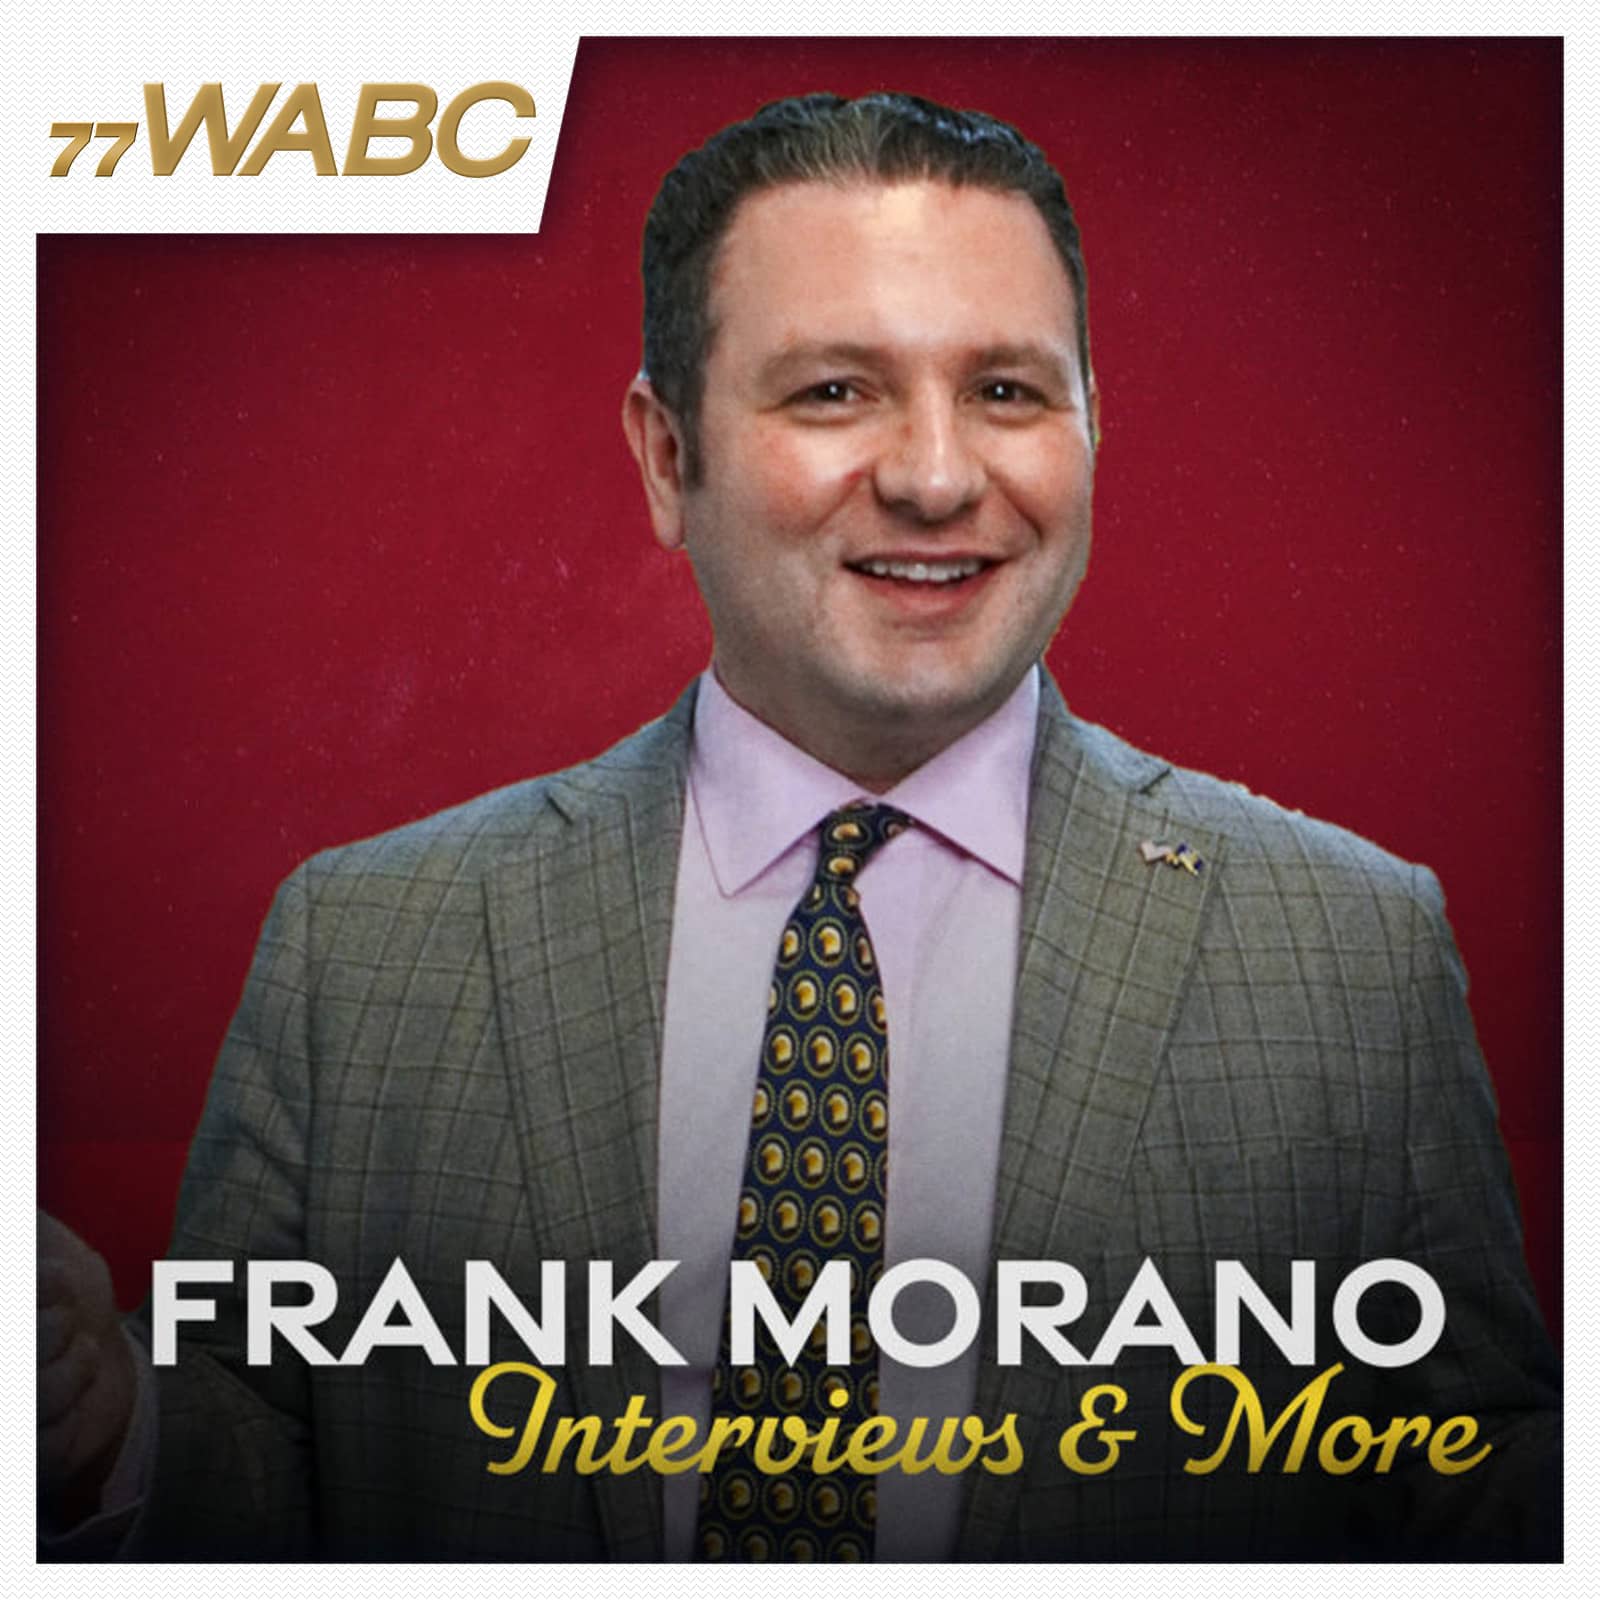 frank-morano-interviews-and-more-podcast-new-logo-174